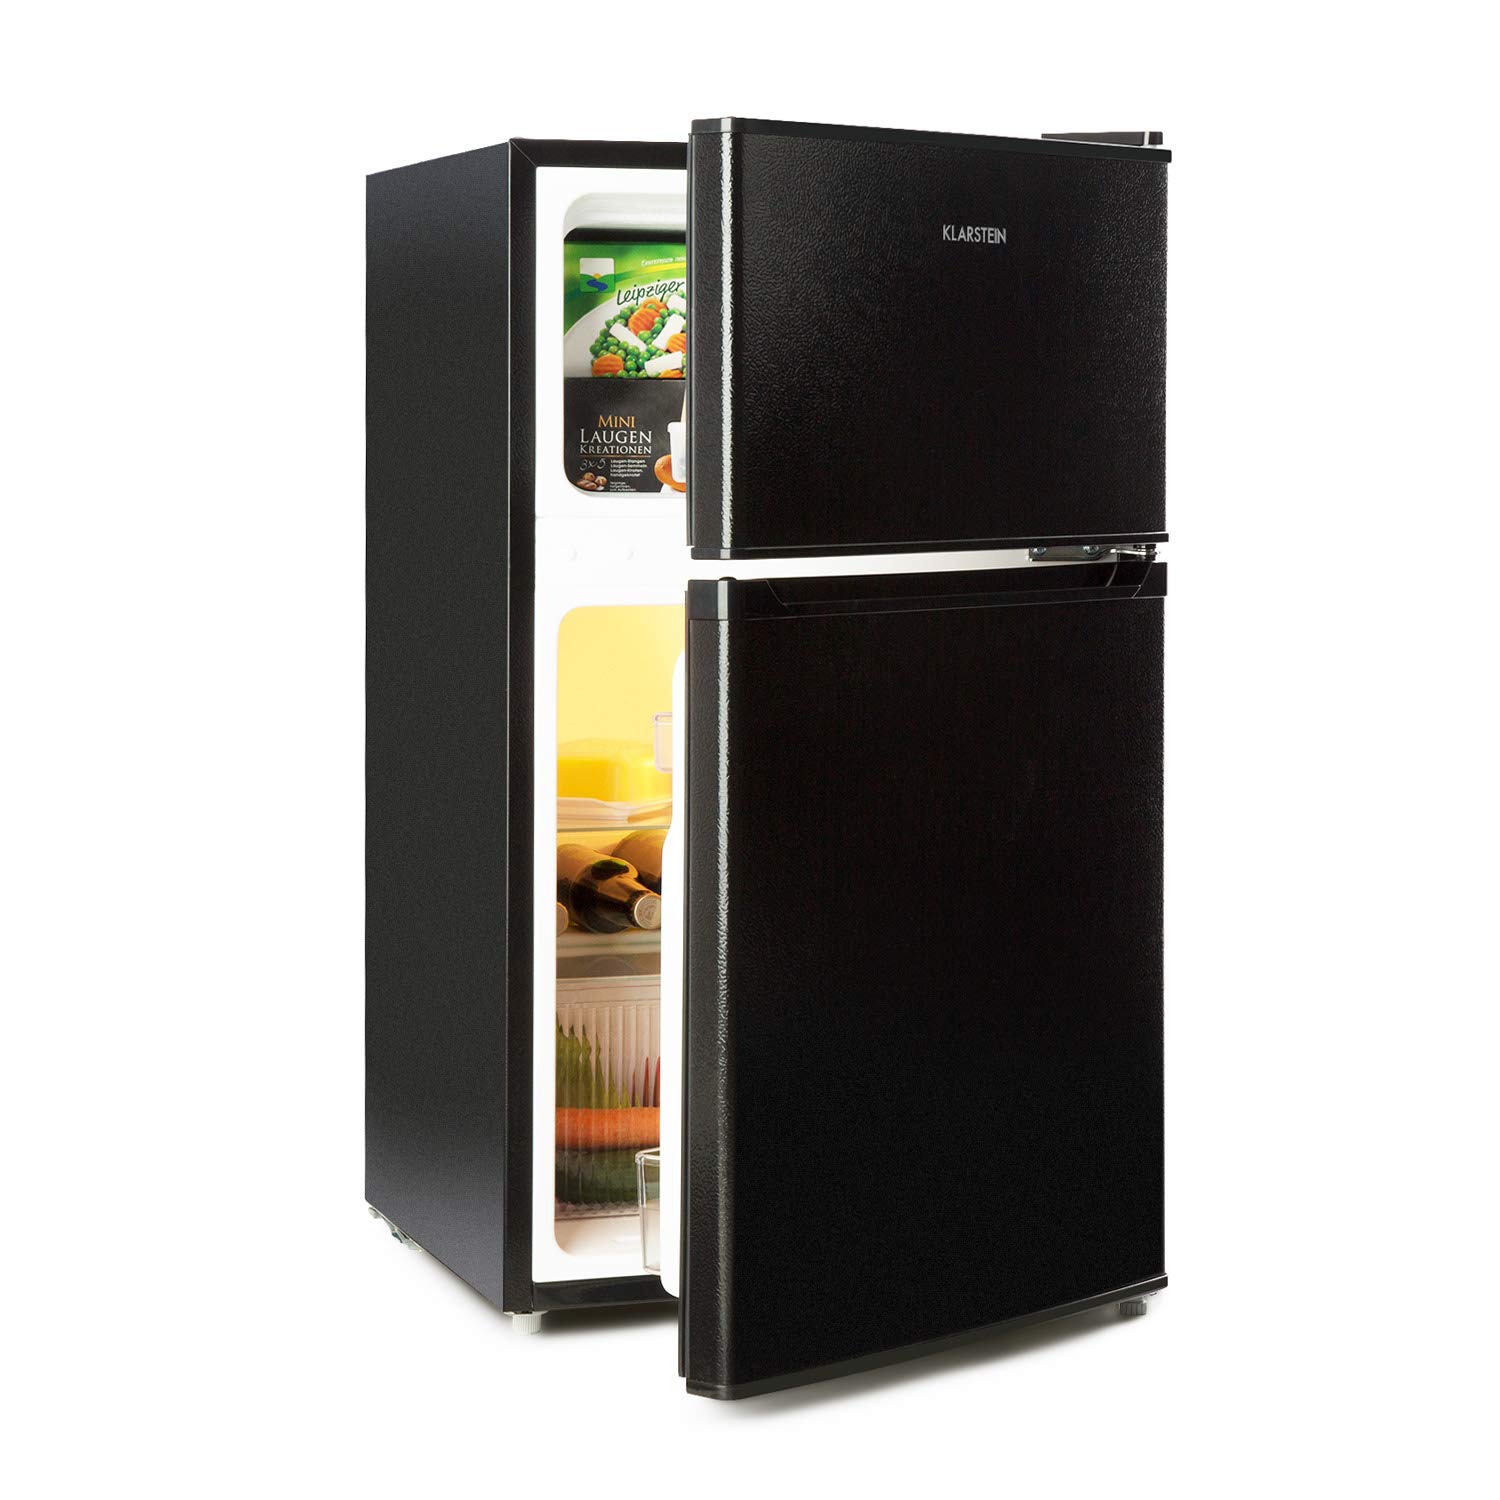 Big Daddy Cool Freezer Refrigerator User Manual